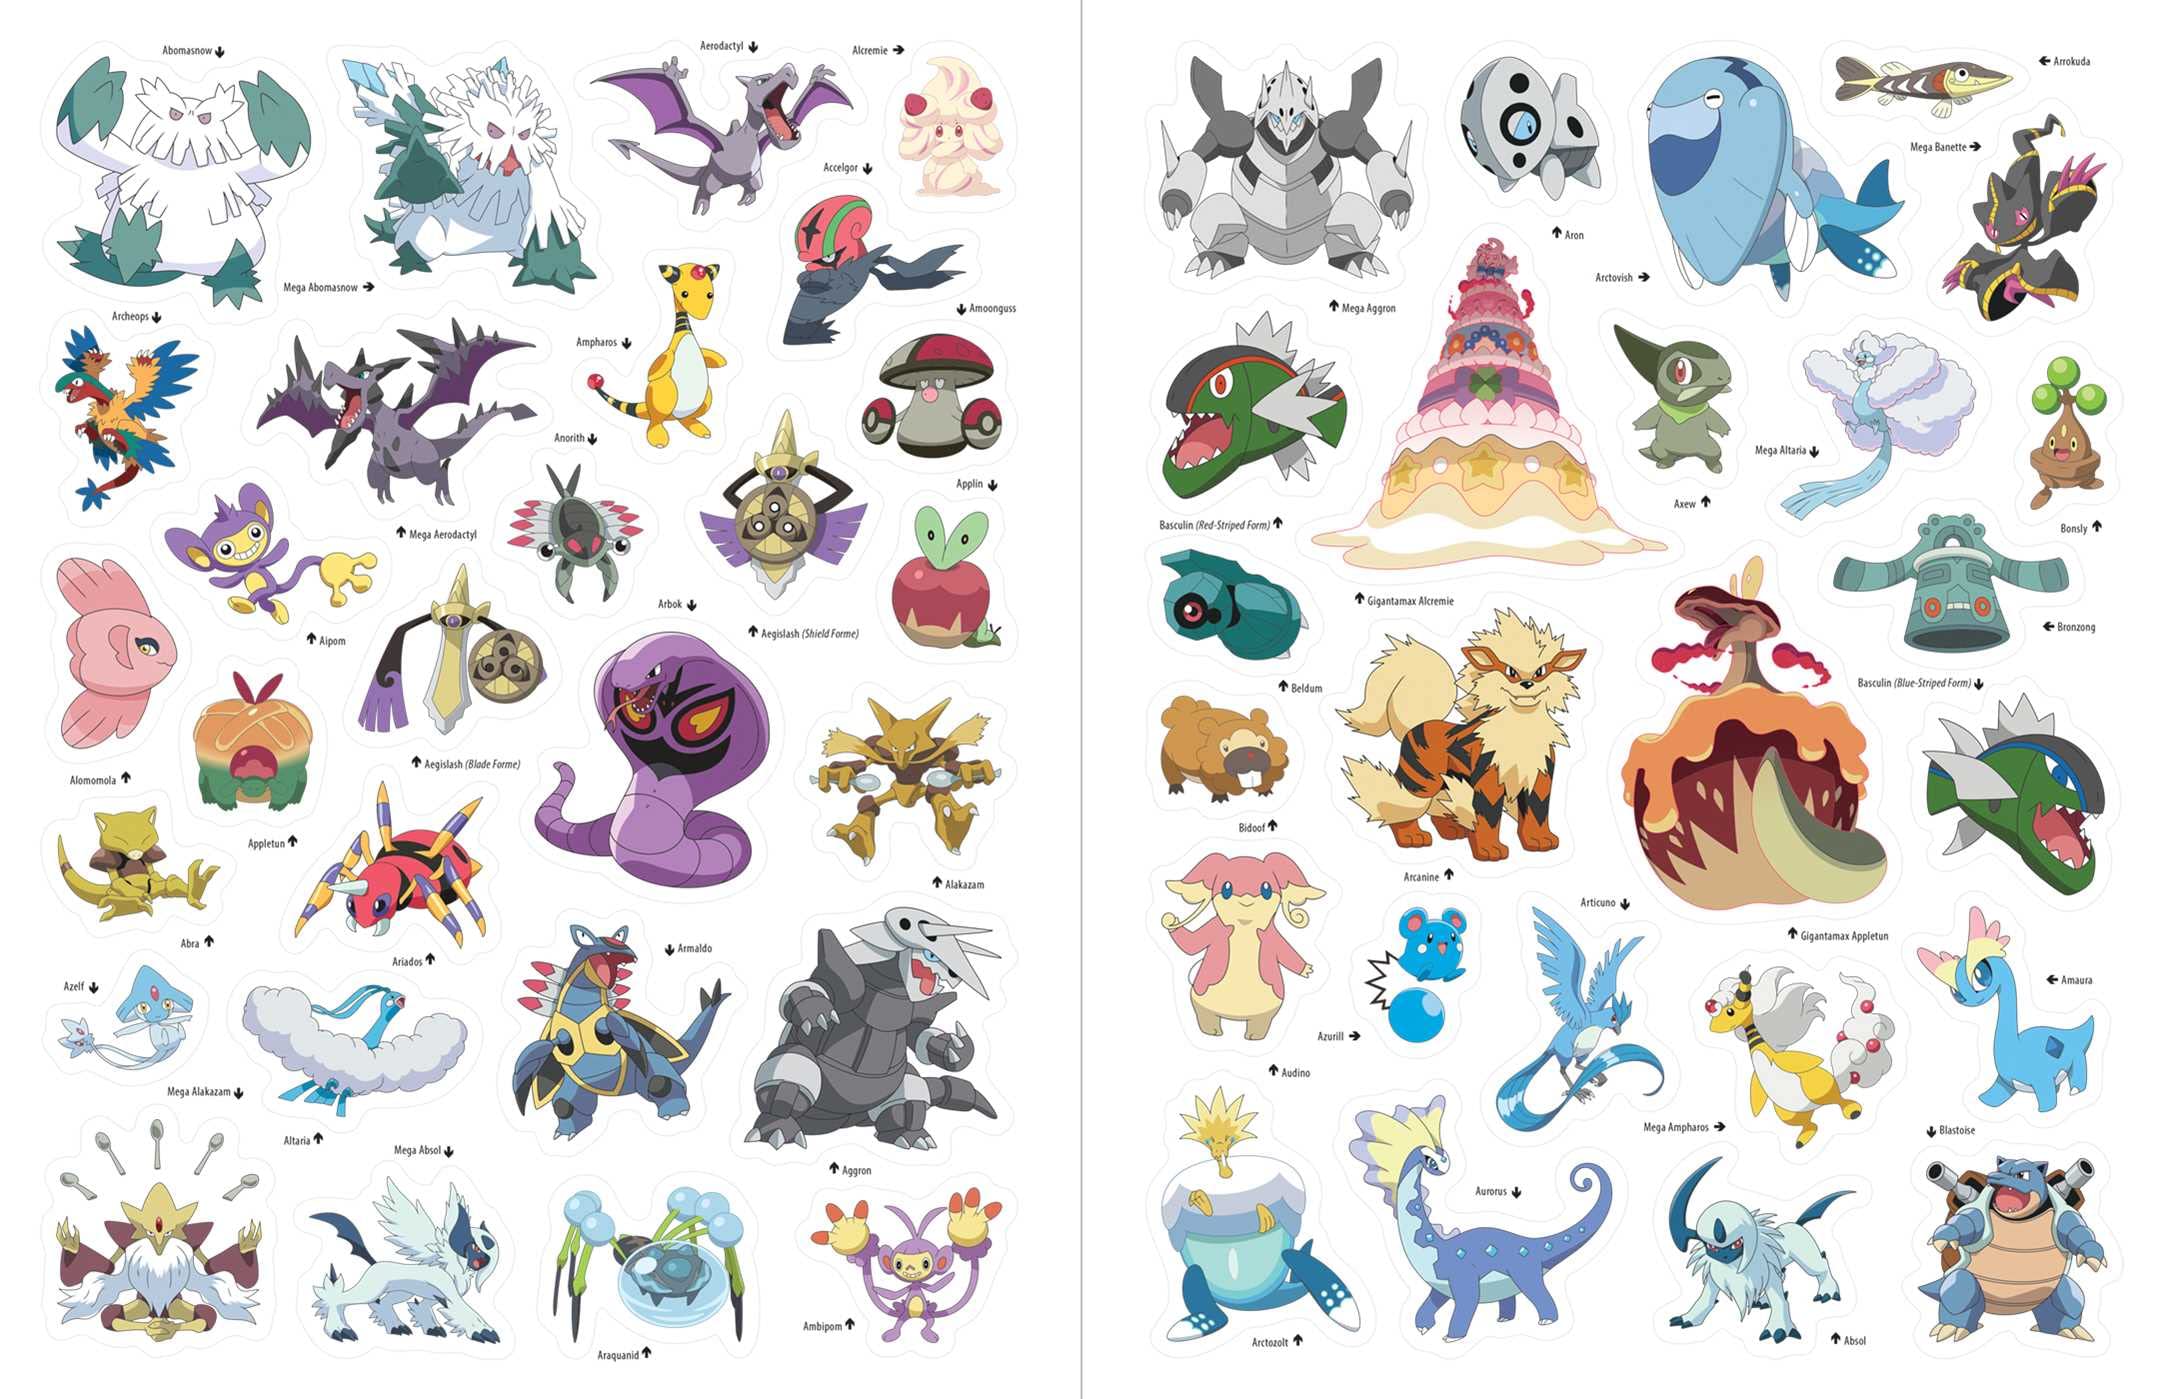 Pokémon Epic Sticker Collection 2nd Edition: From Kanto to Galar (2) (Pokemon Epic Sticker Collection)